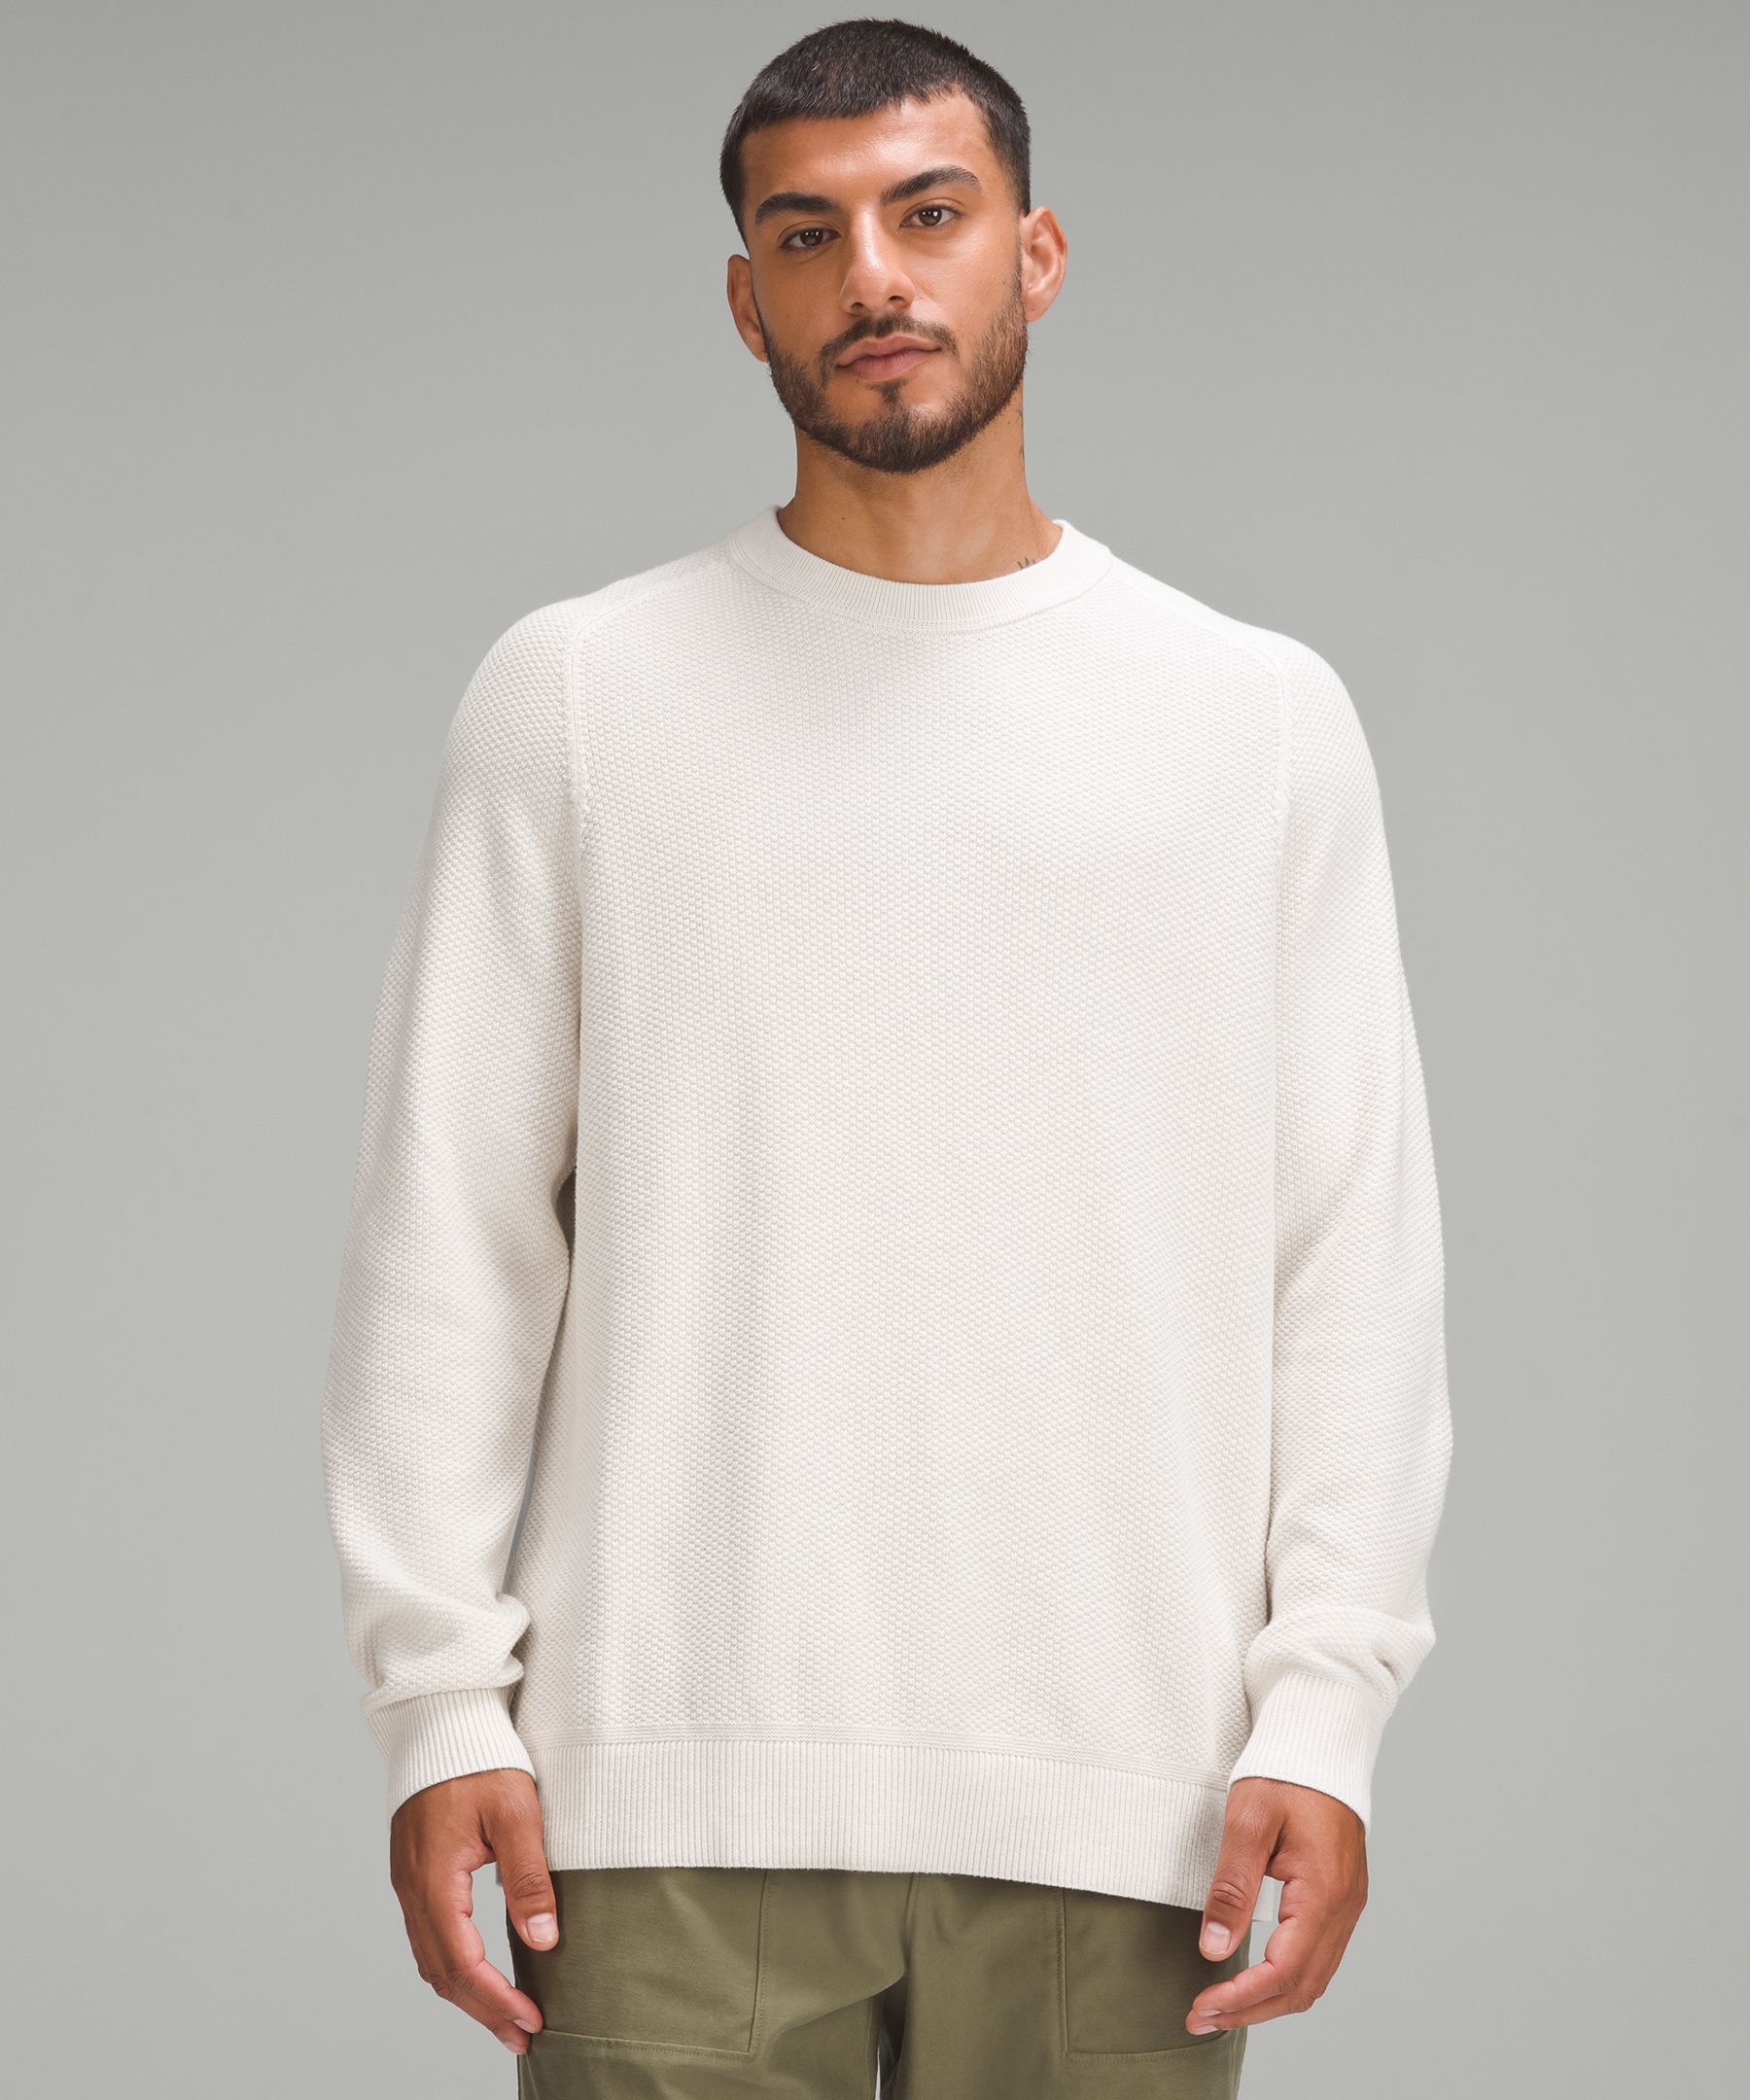 Textured Knit Crewneck Sweater, Men's Hoodies & Sweatshirts